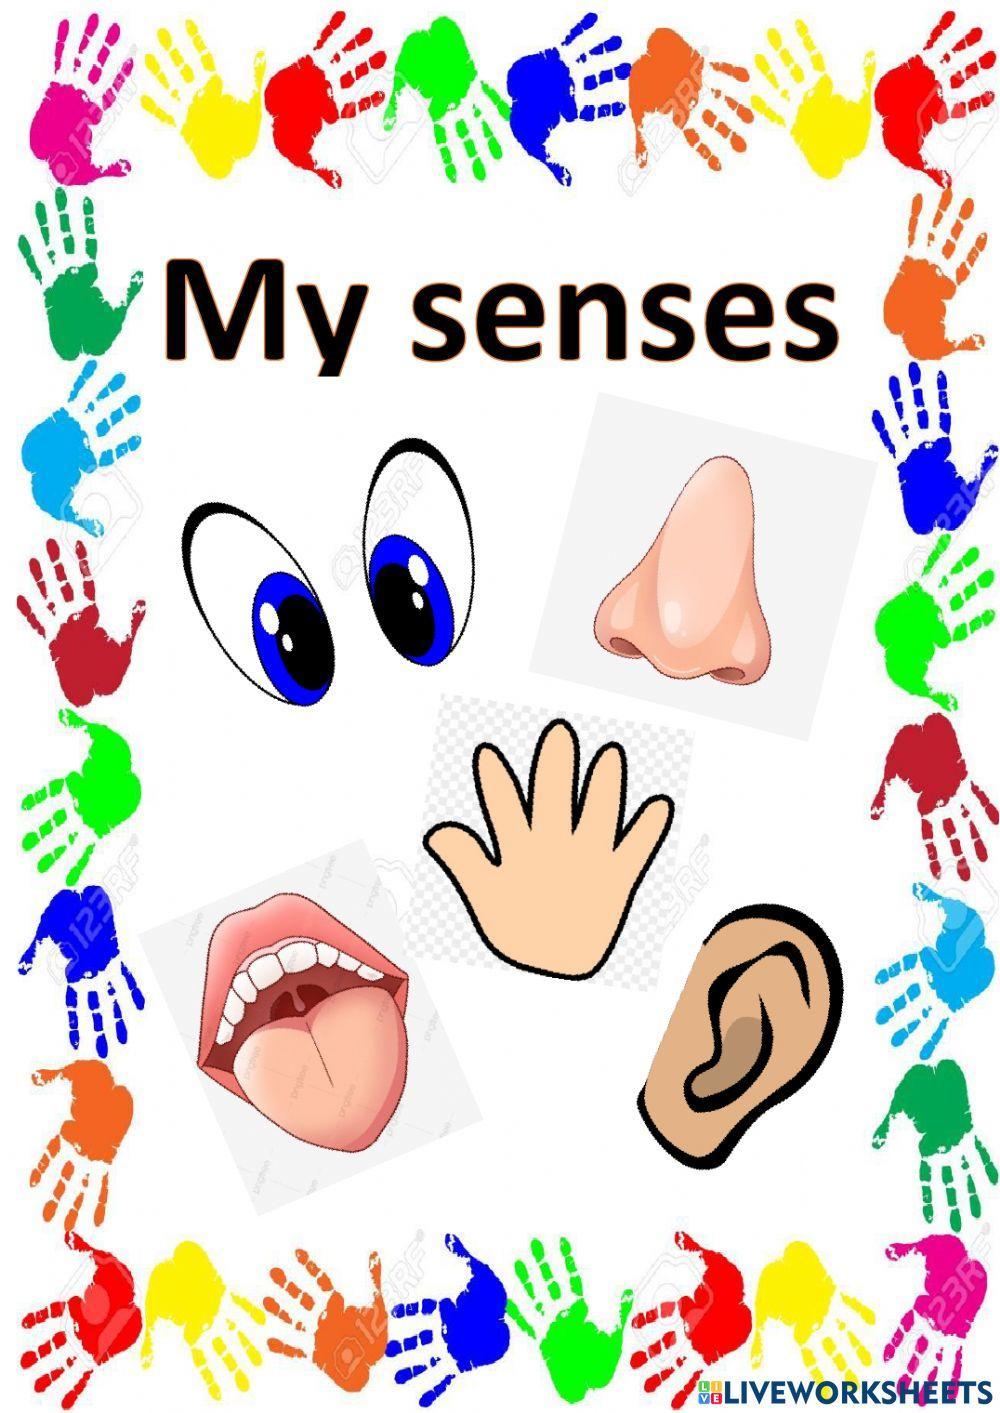 My senses | Live Worksheets